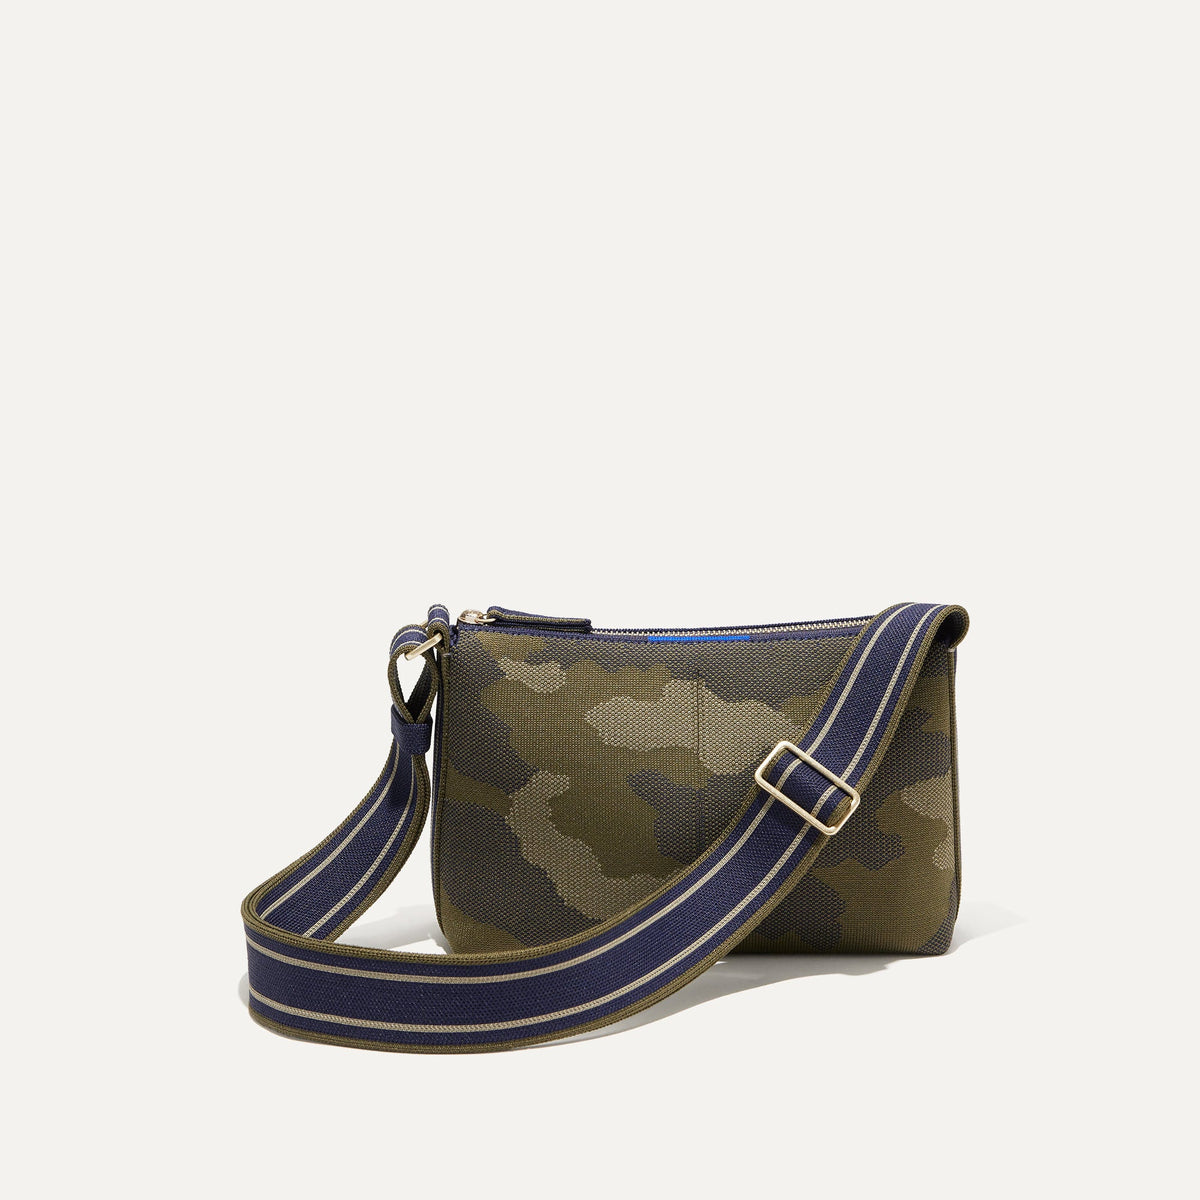 Louis Vuitton camo luggage  Bags, Camo luggage, Designer luggage